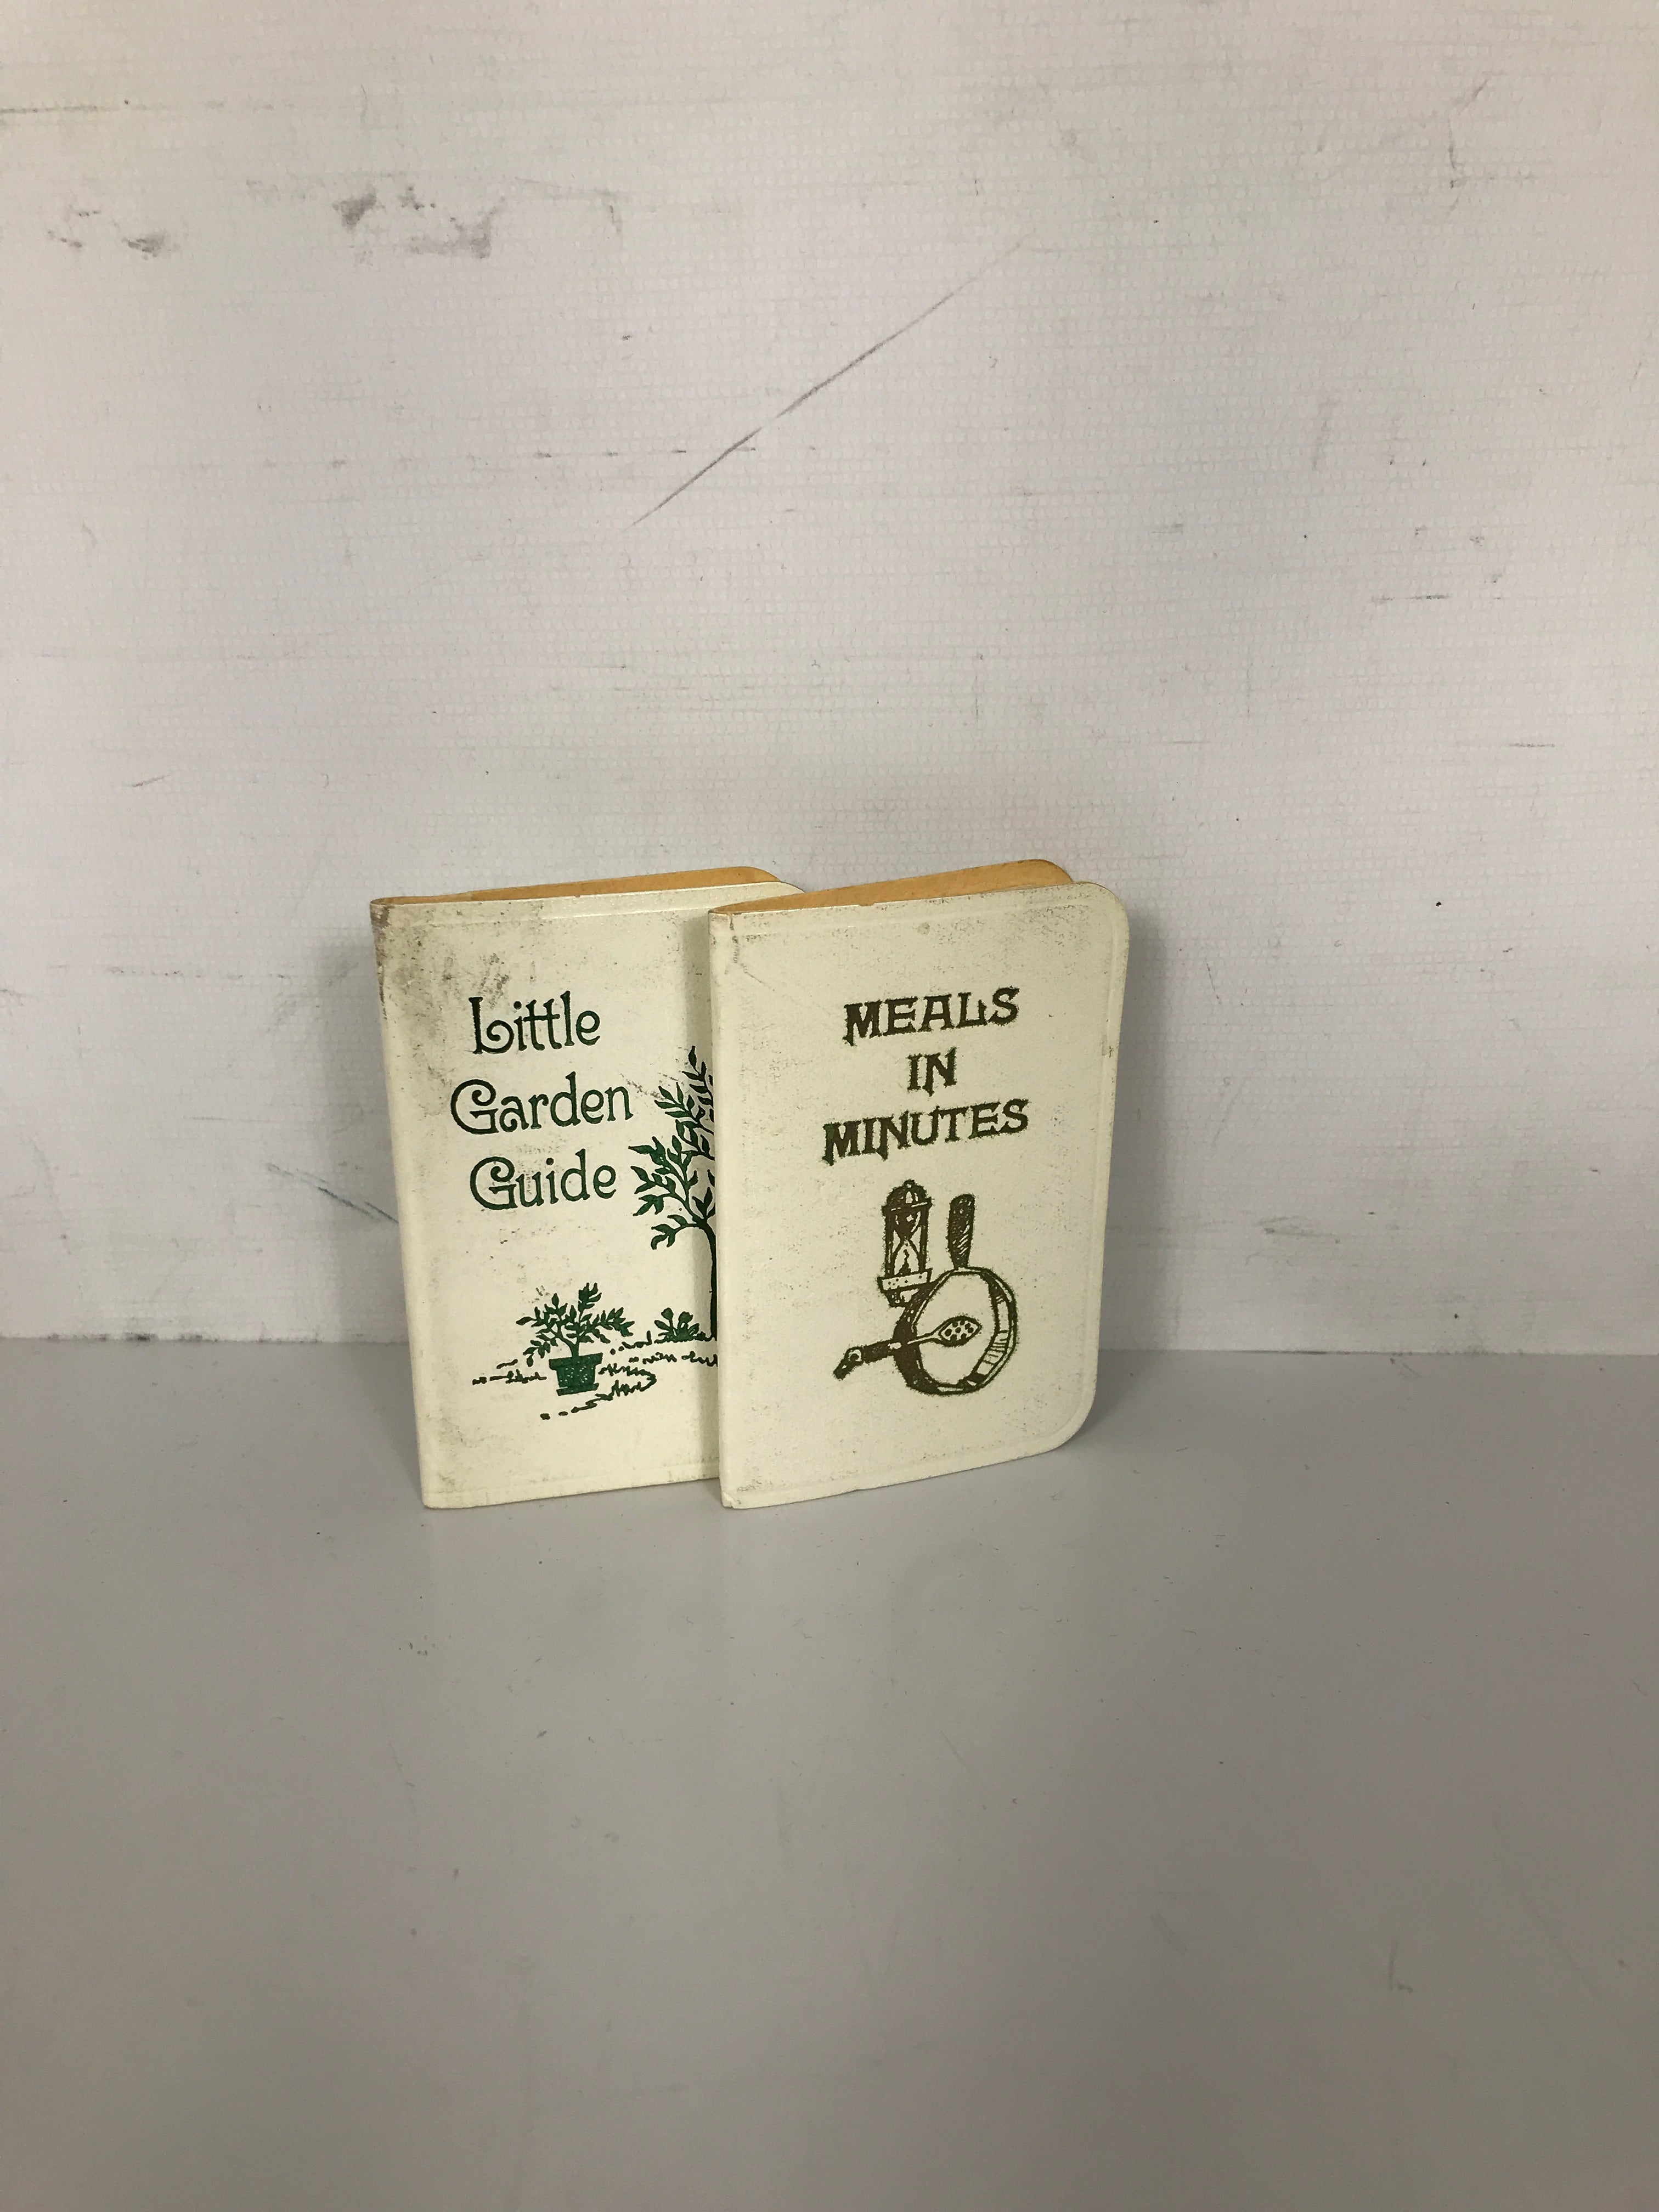 Lot of 2 Vintage Hallmark Mini Books: Meals in Minutes & Little Garden Guide SC